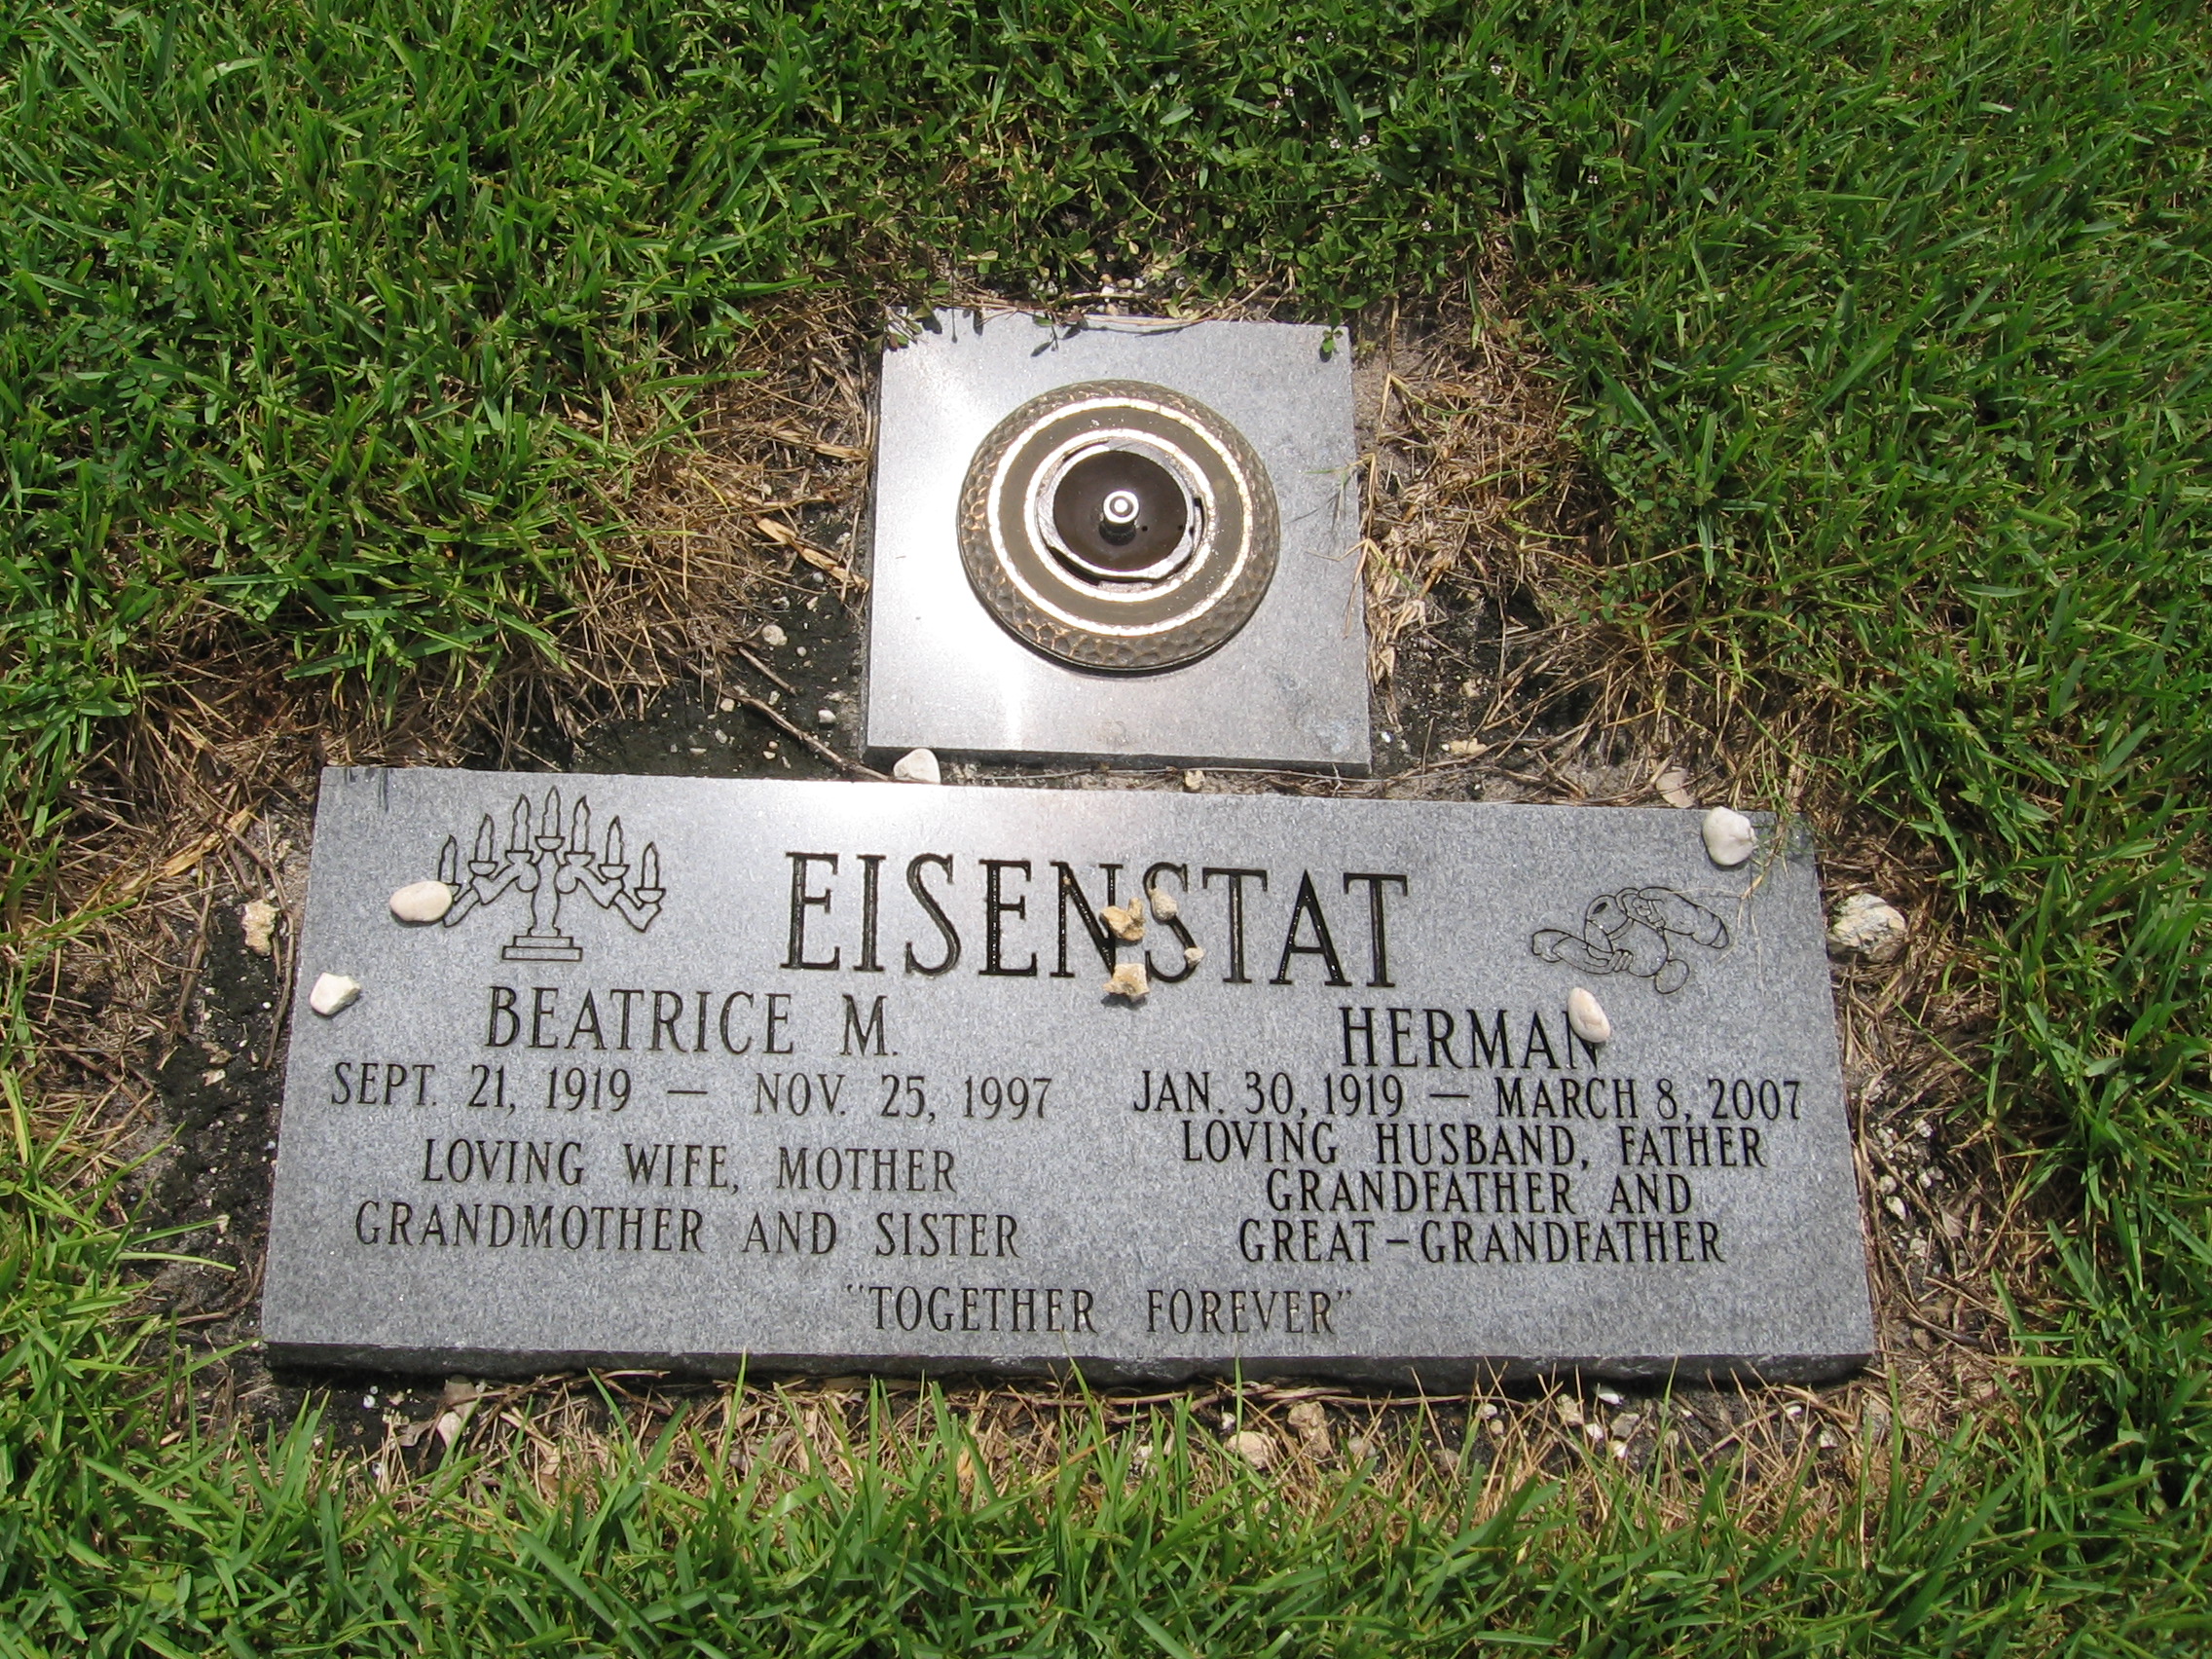 Herman Eisenstat